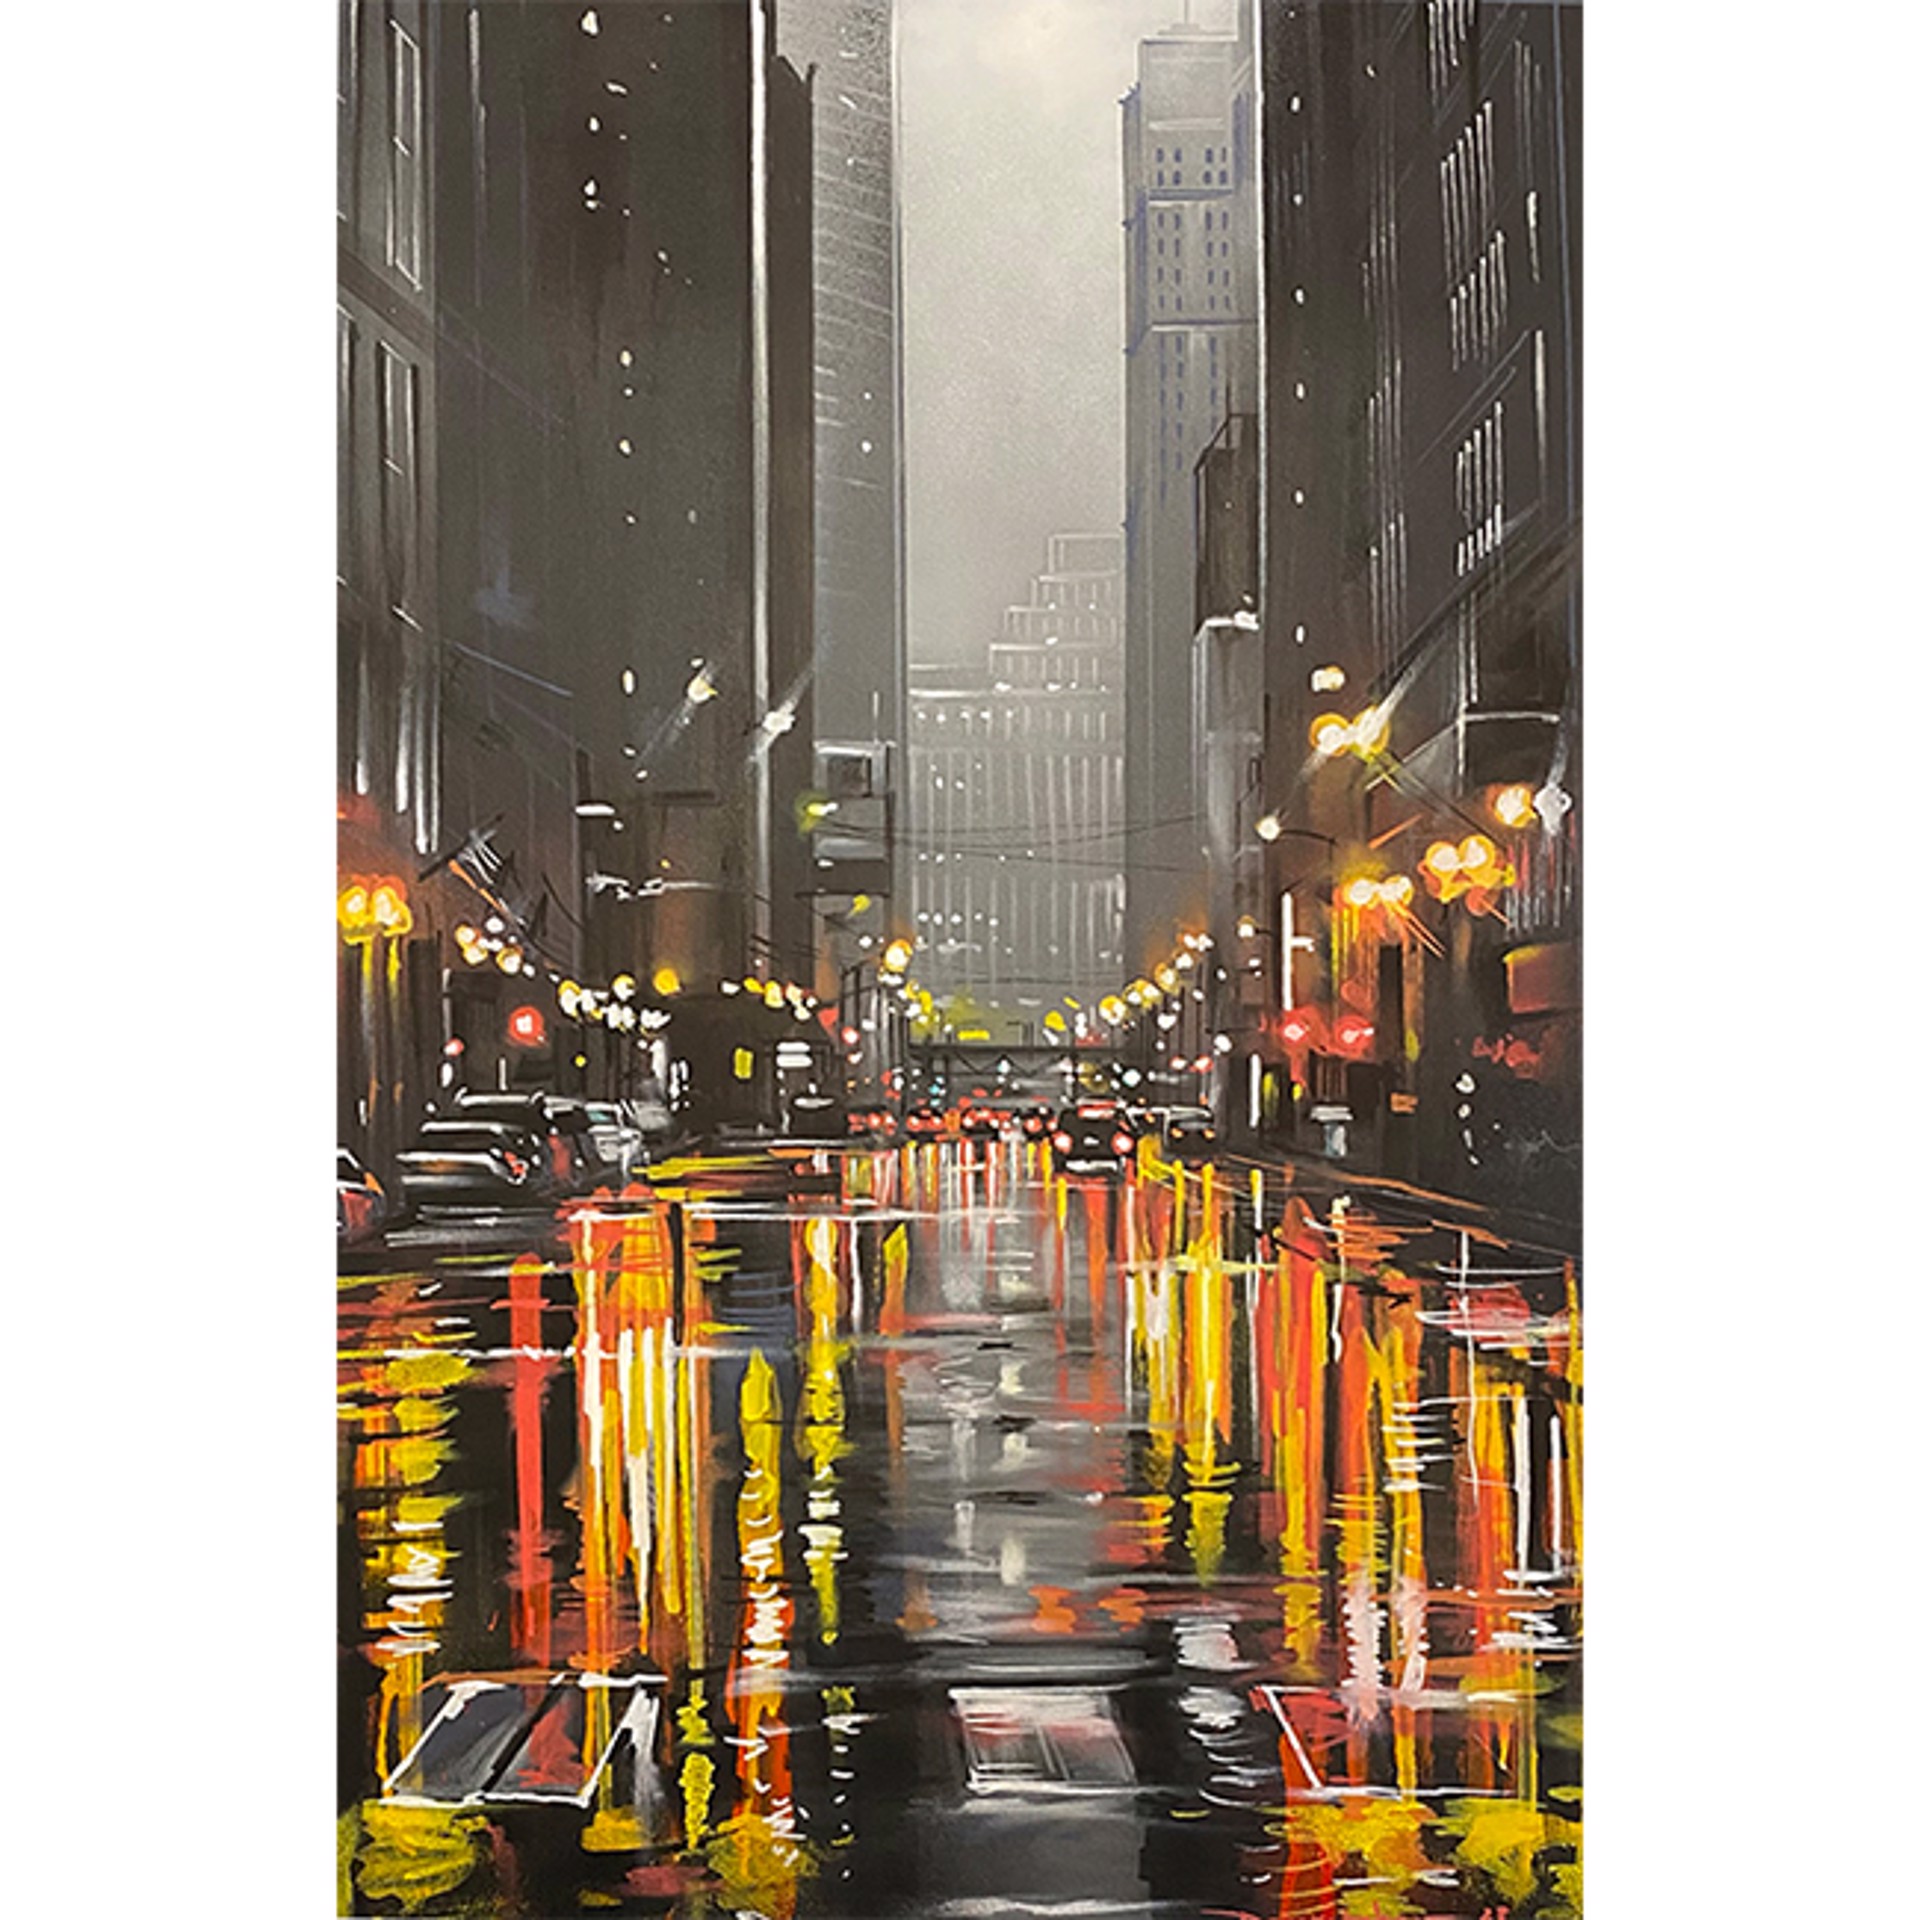 Rainy Streets by Dan Kitchener